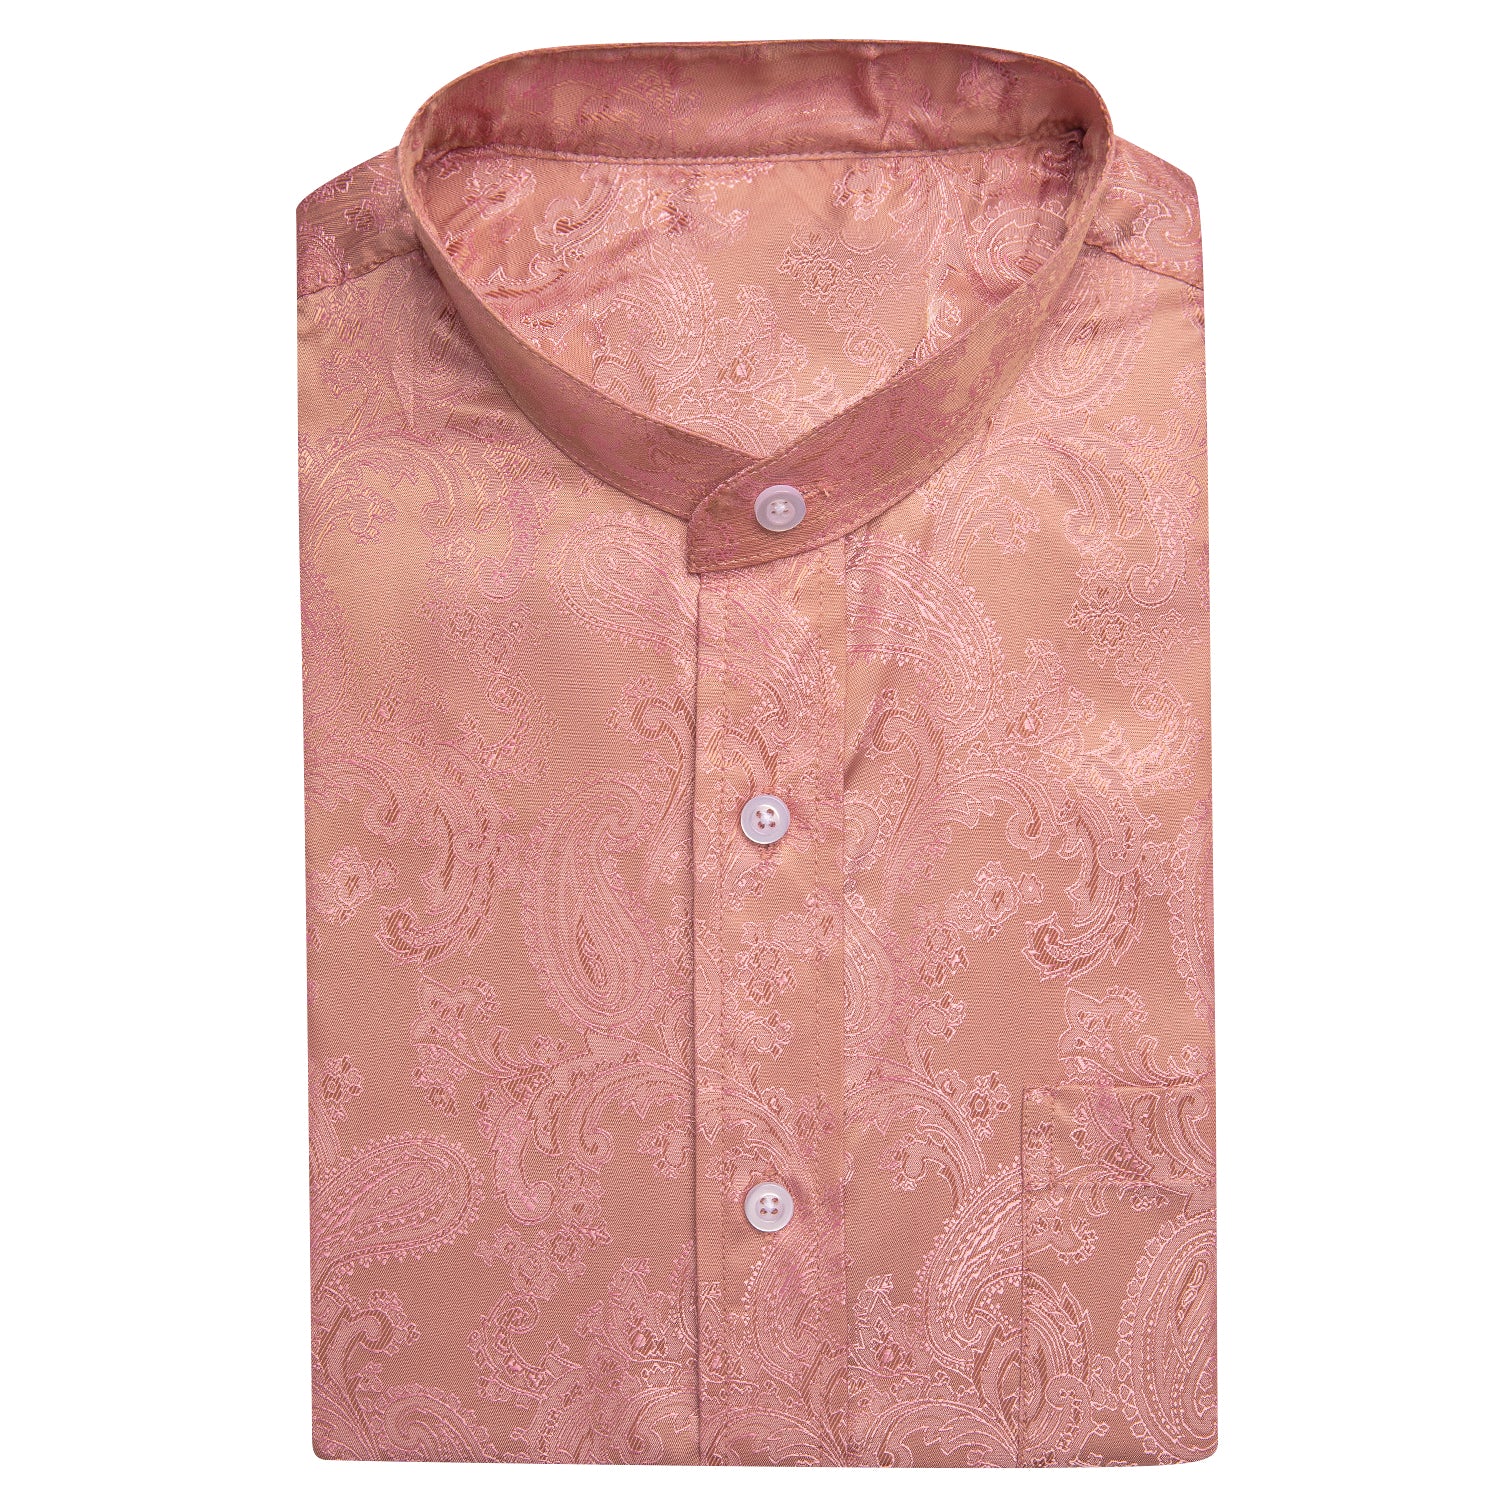 HITIE Coral Pink Paisley Silk Men's Short Sleeve Shirt